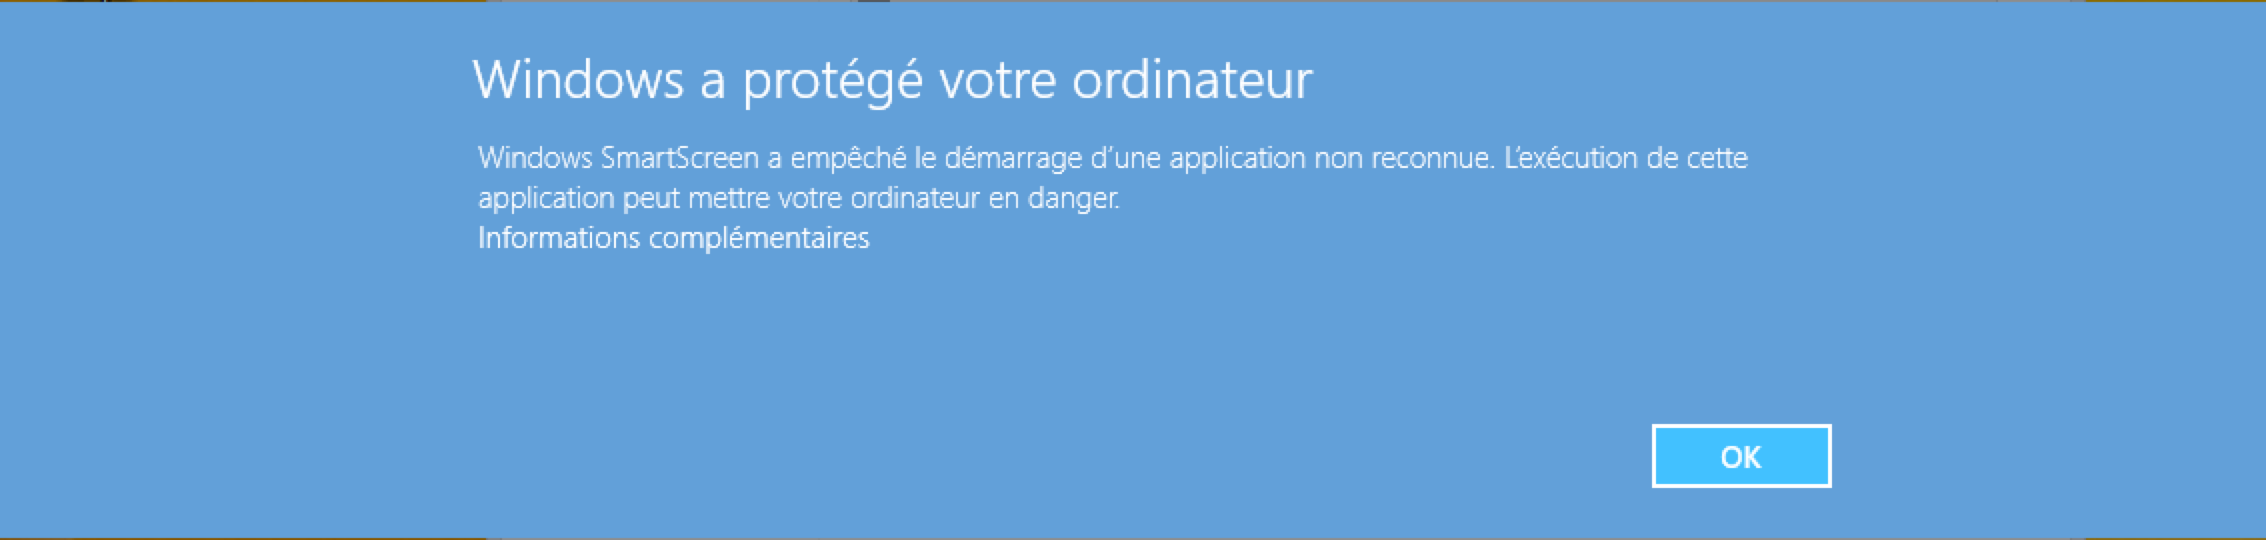 Initial warning on Windows 8